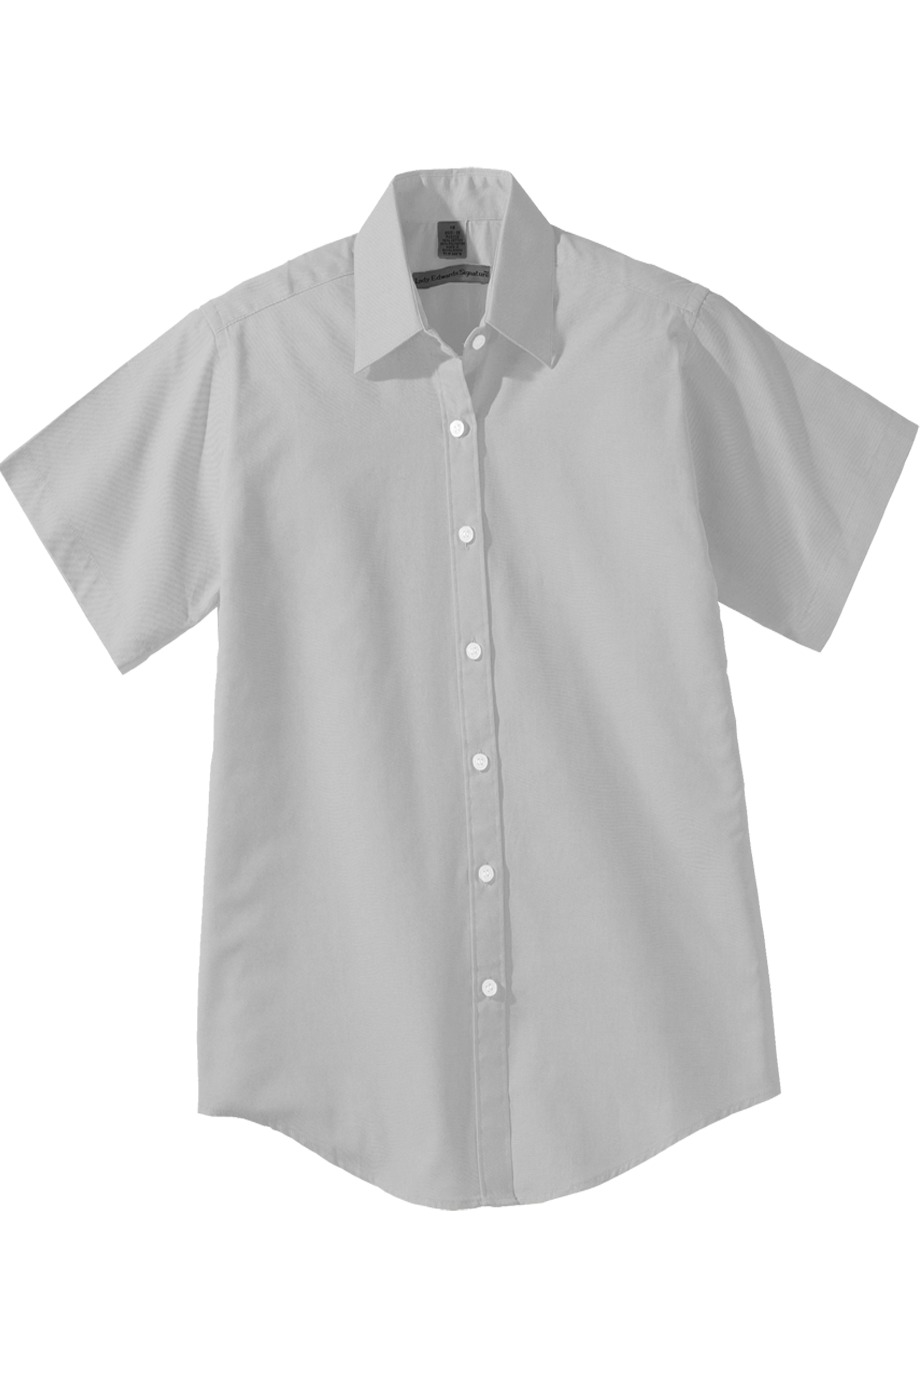 Edwards Garment 5925 - Women's Short Sleeve Pinpoint Oxford Shirt